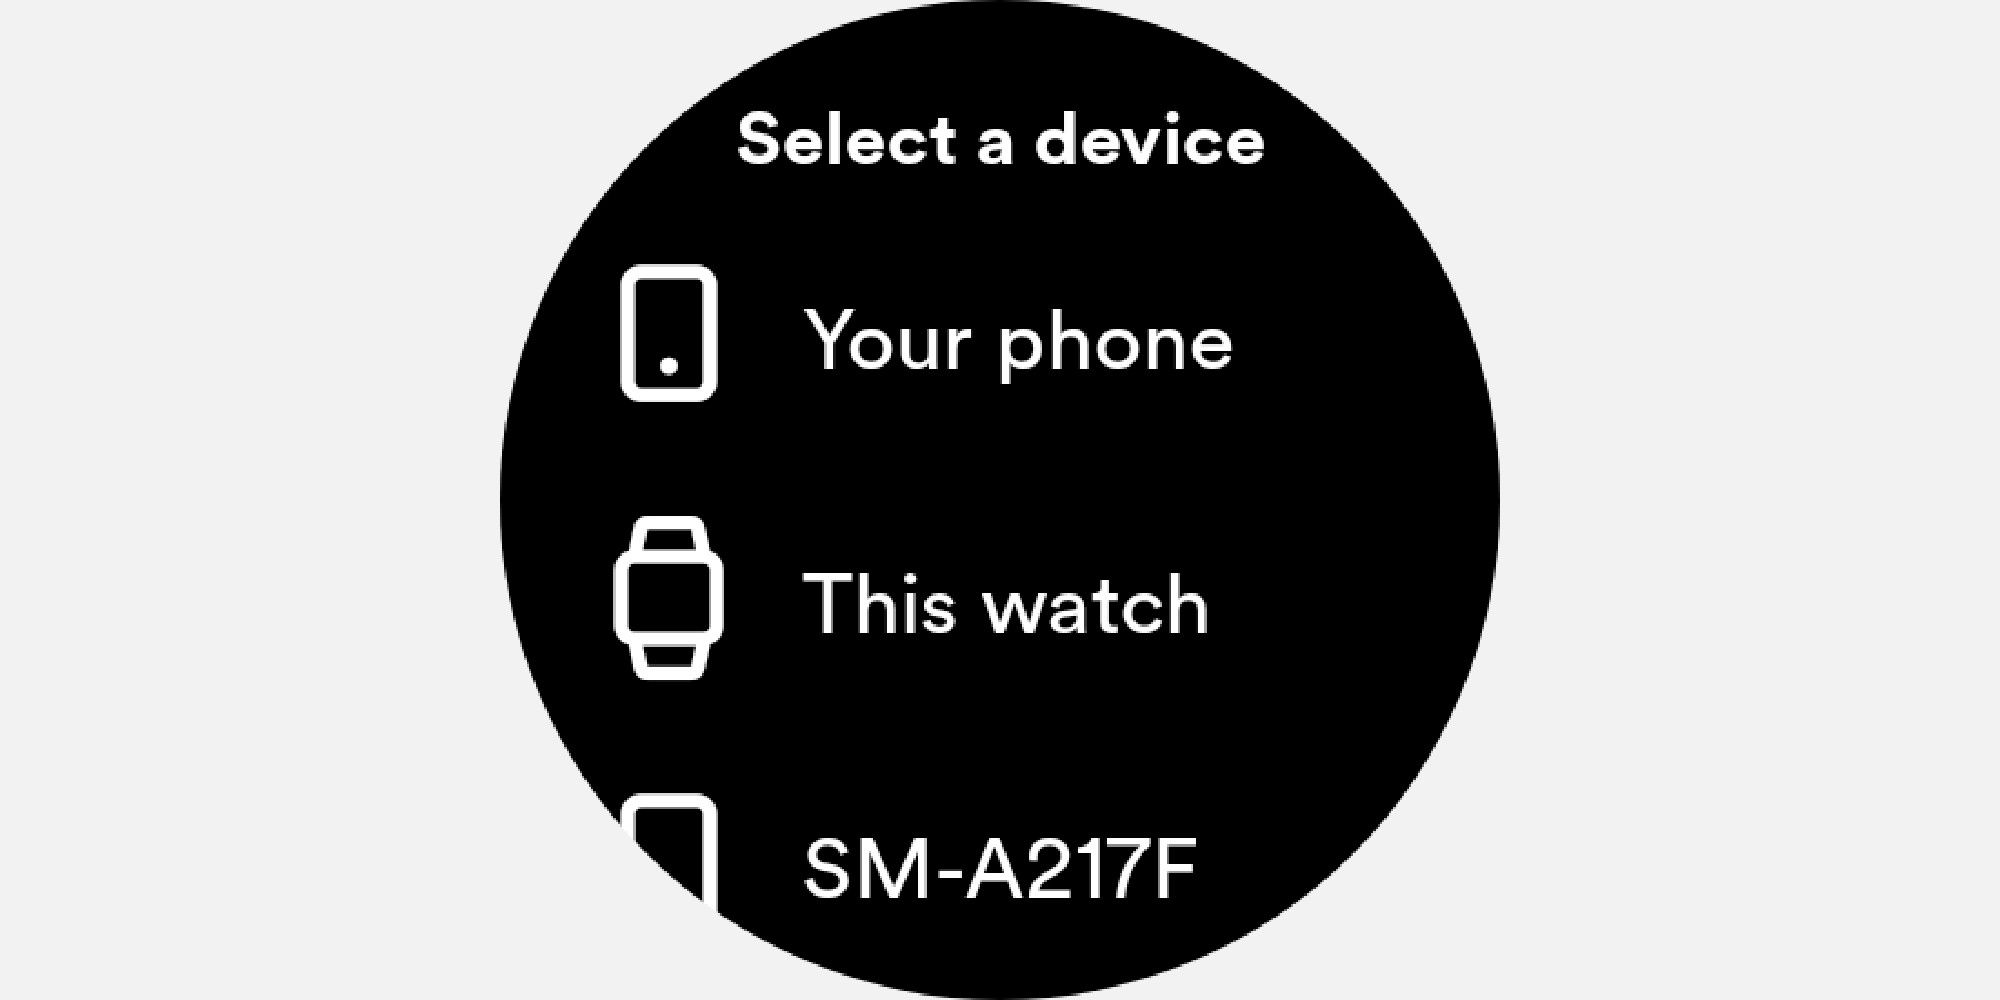 Device options in the Galaxy 4 Smartwatch drop-down menu